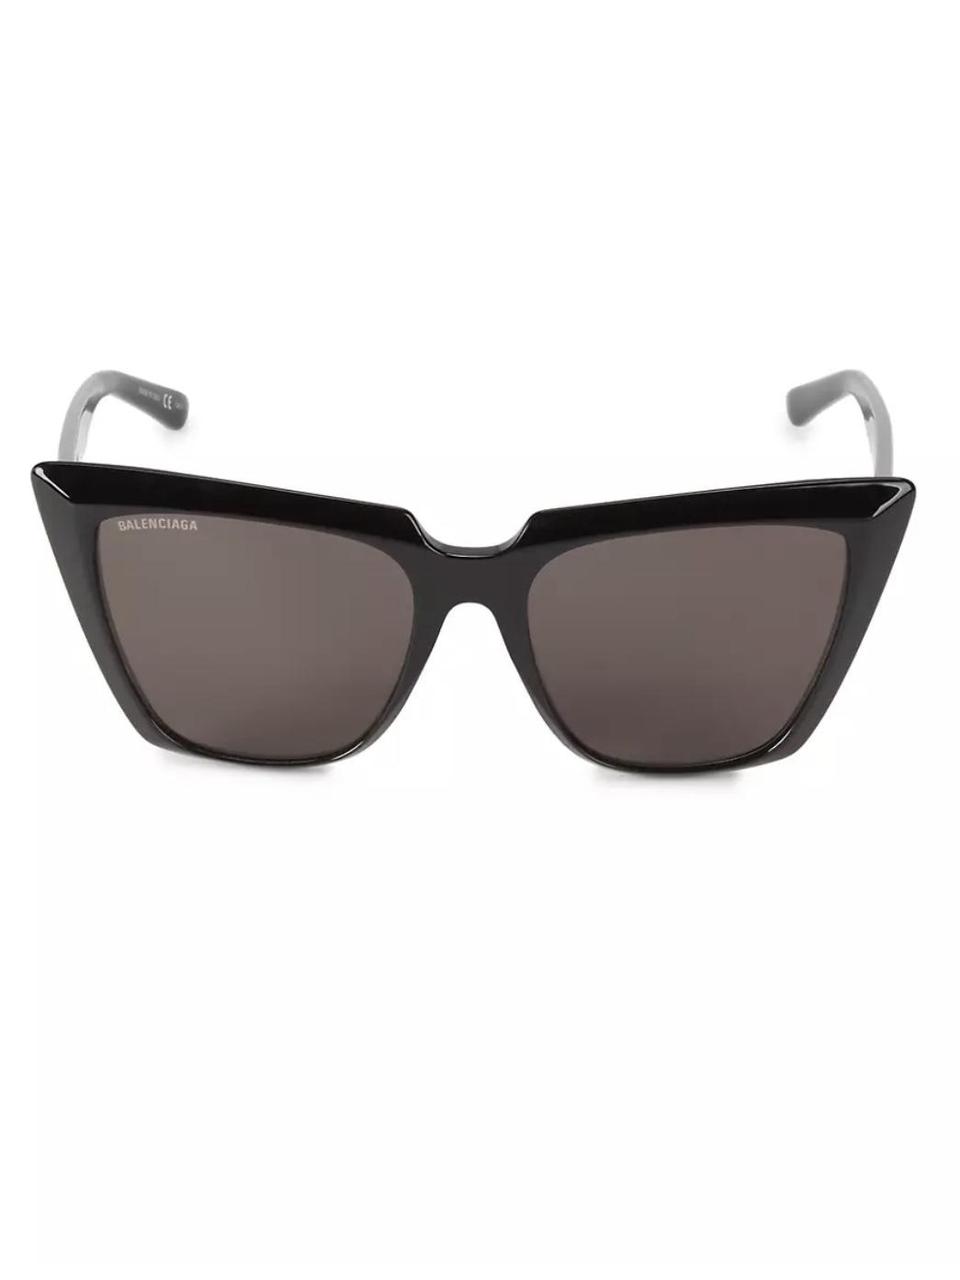 Balenciaga Men's Black Sunglasses